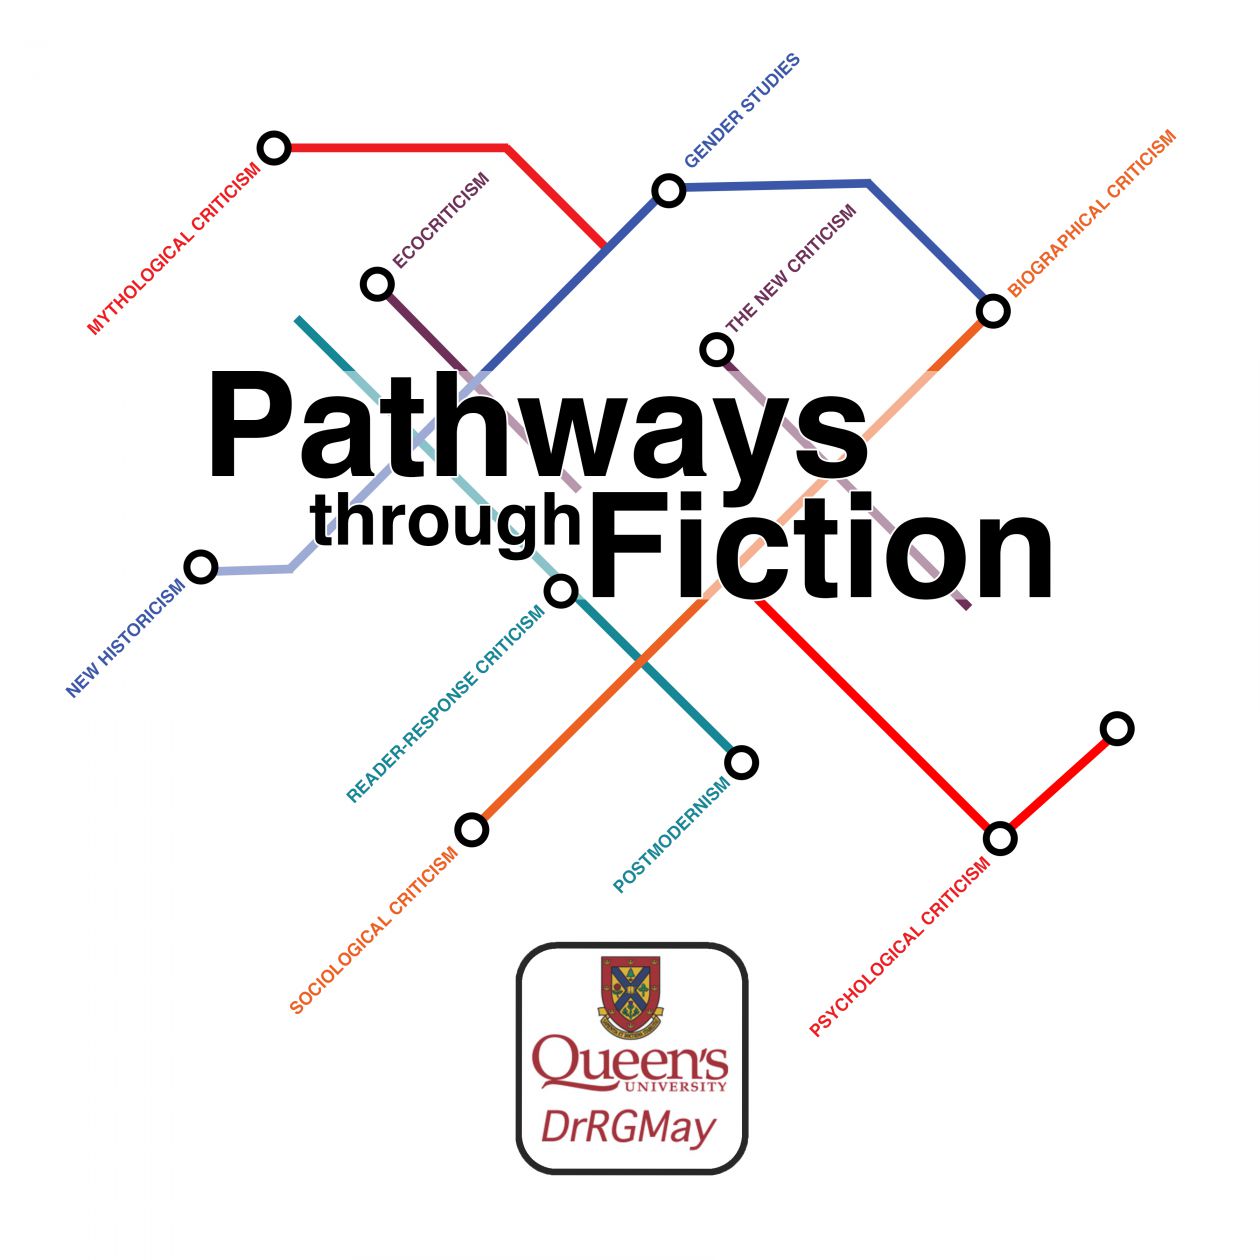 Pathways through Fiction